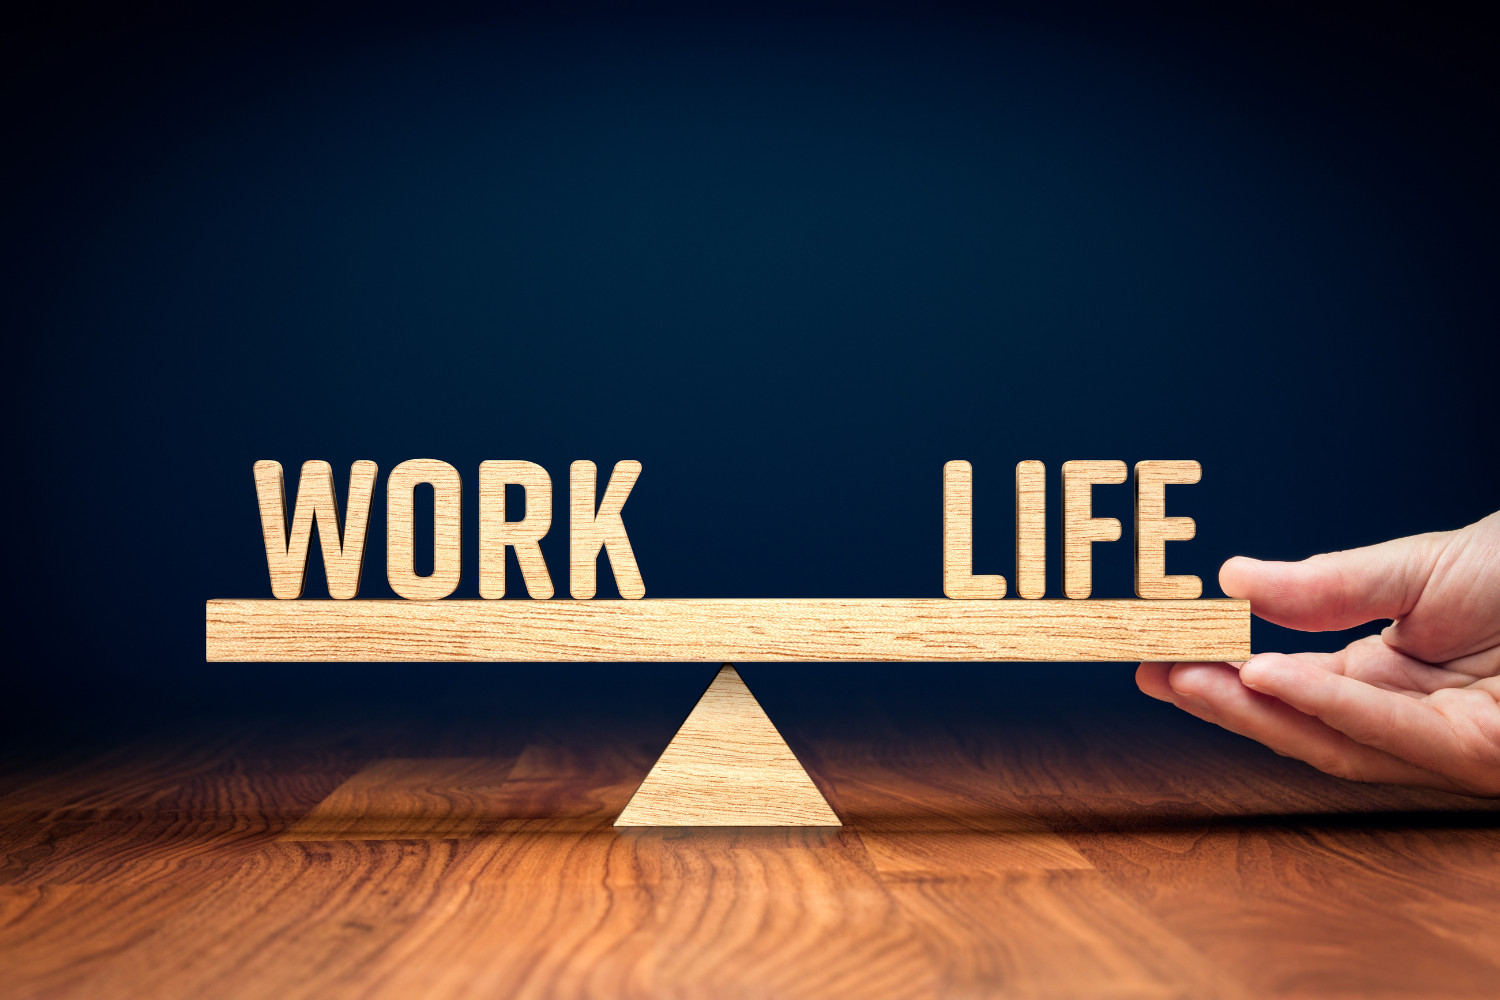 work-life balance | Outsourcery